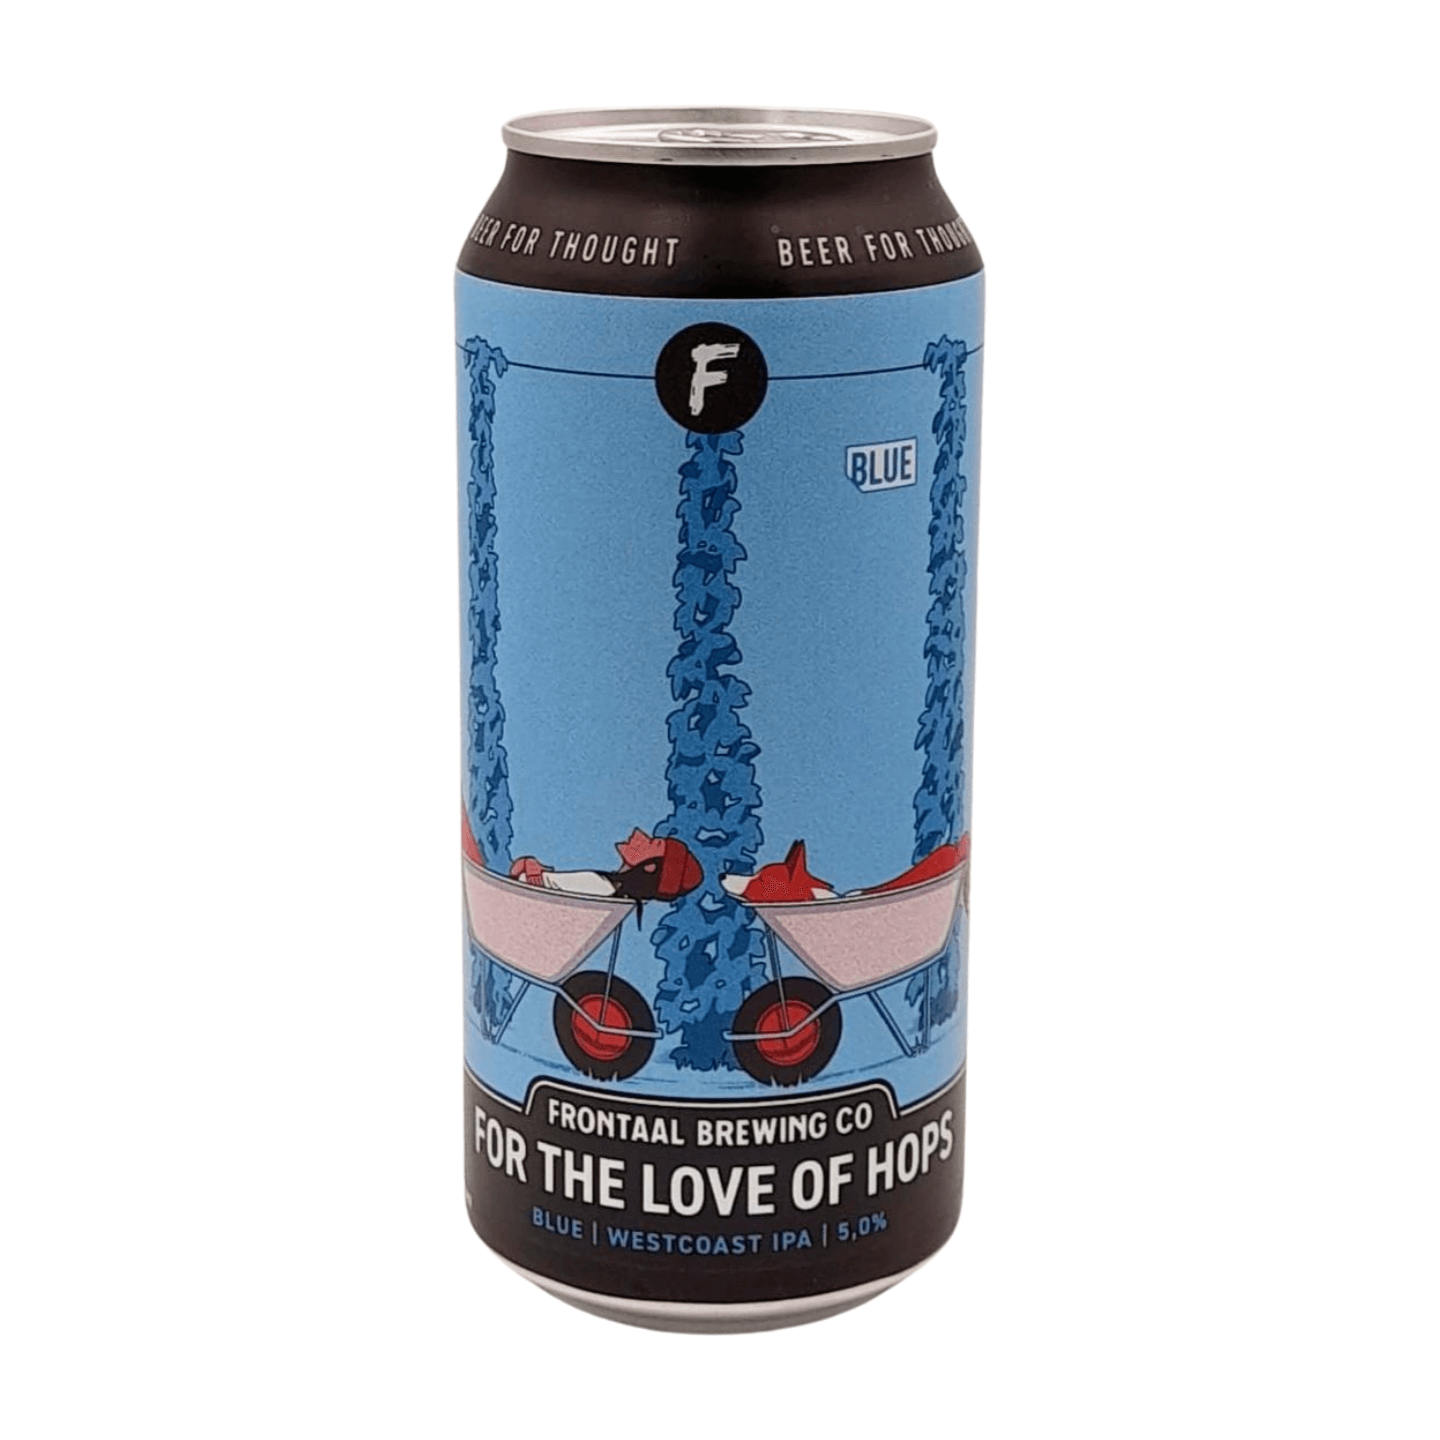 Frontaal Brewing Co. For the Love of Hops 'Blue' | Westcoast IPA Webshop Online Verdins Bierwinkel Rotterdam